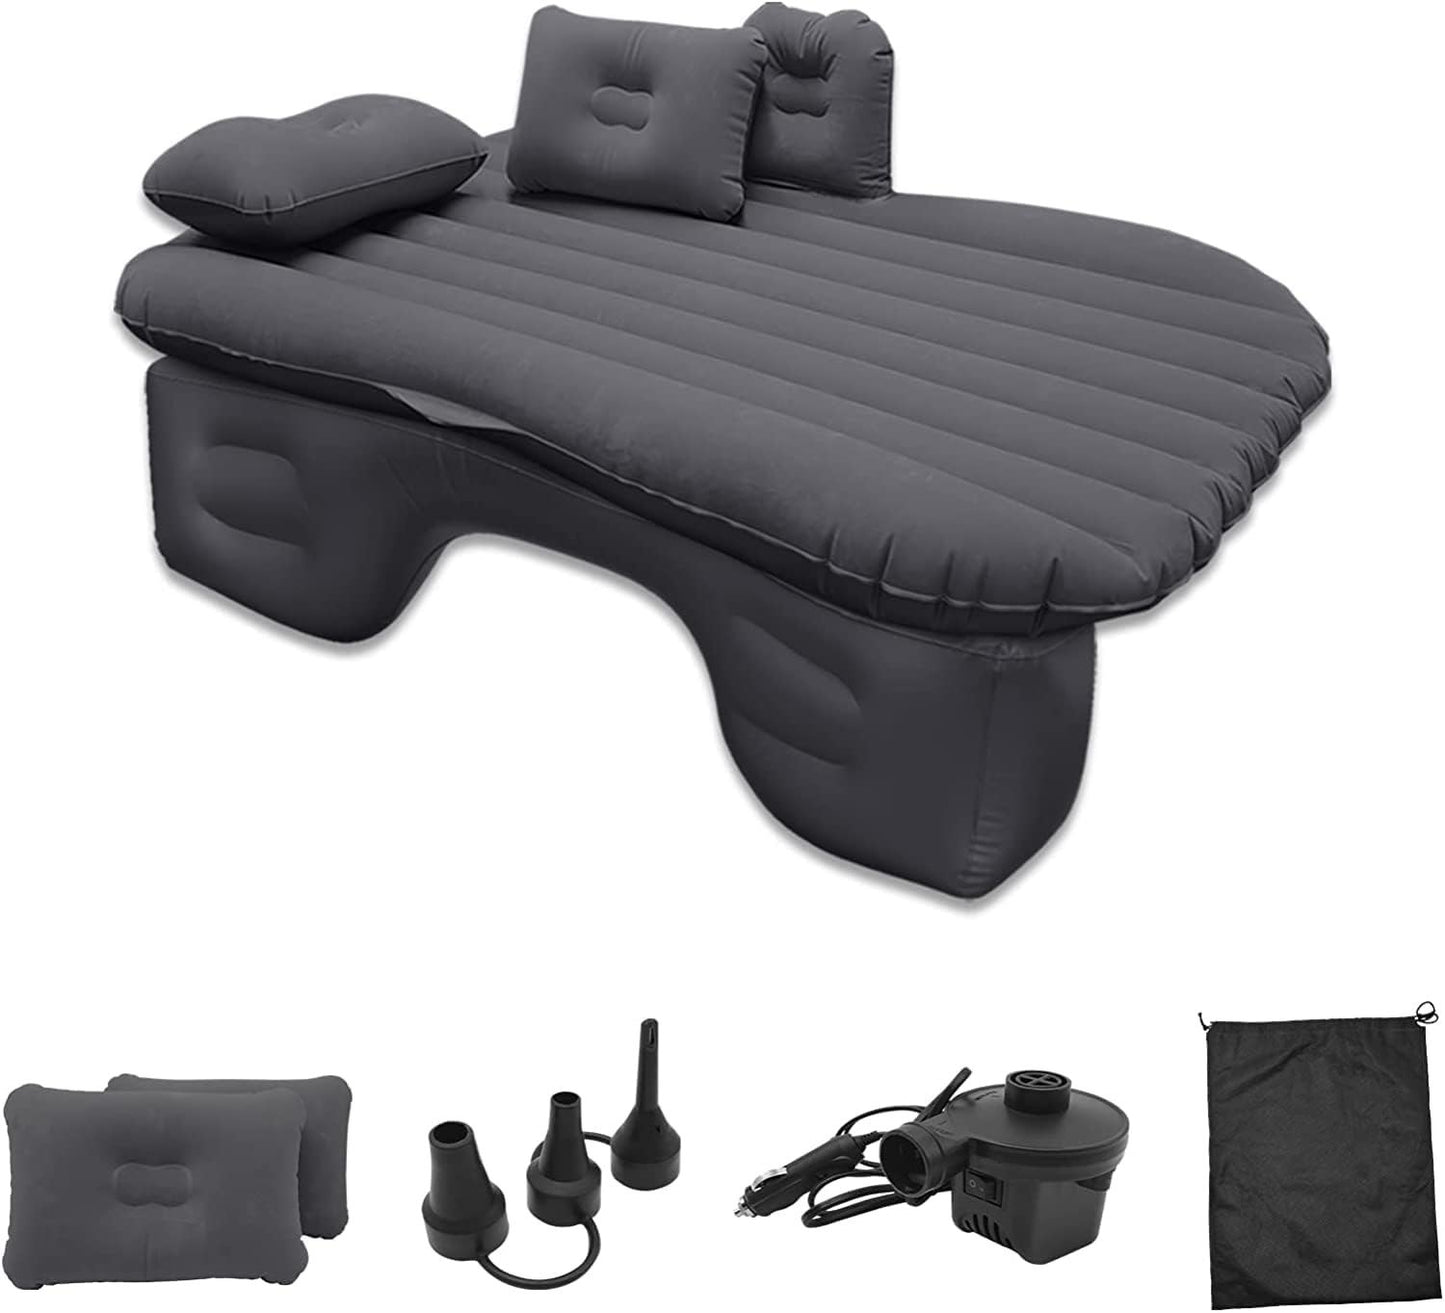 Inflatable Car Bed Air Mattress with Pump & 2 Air Pillows Portable & Compact